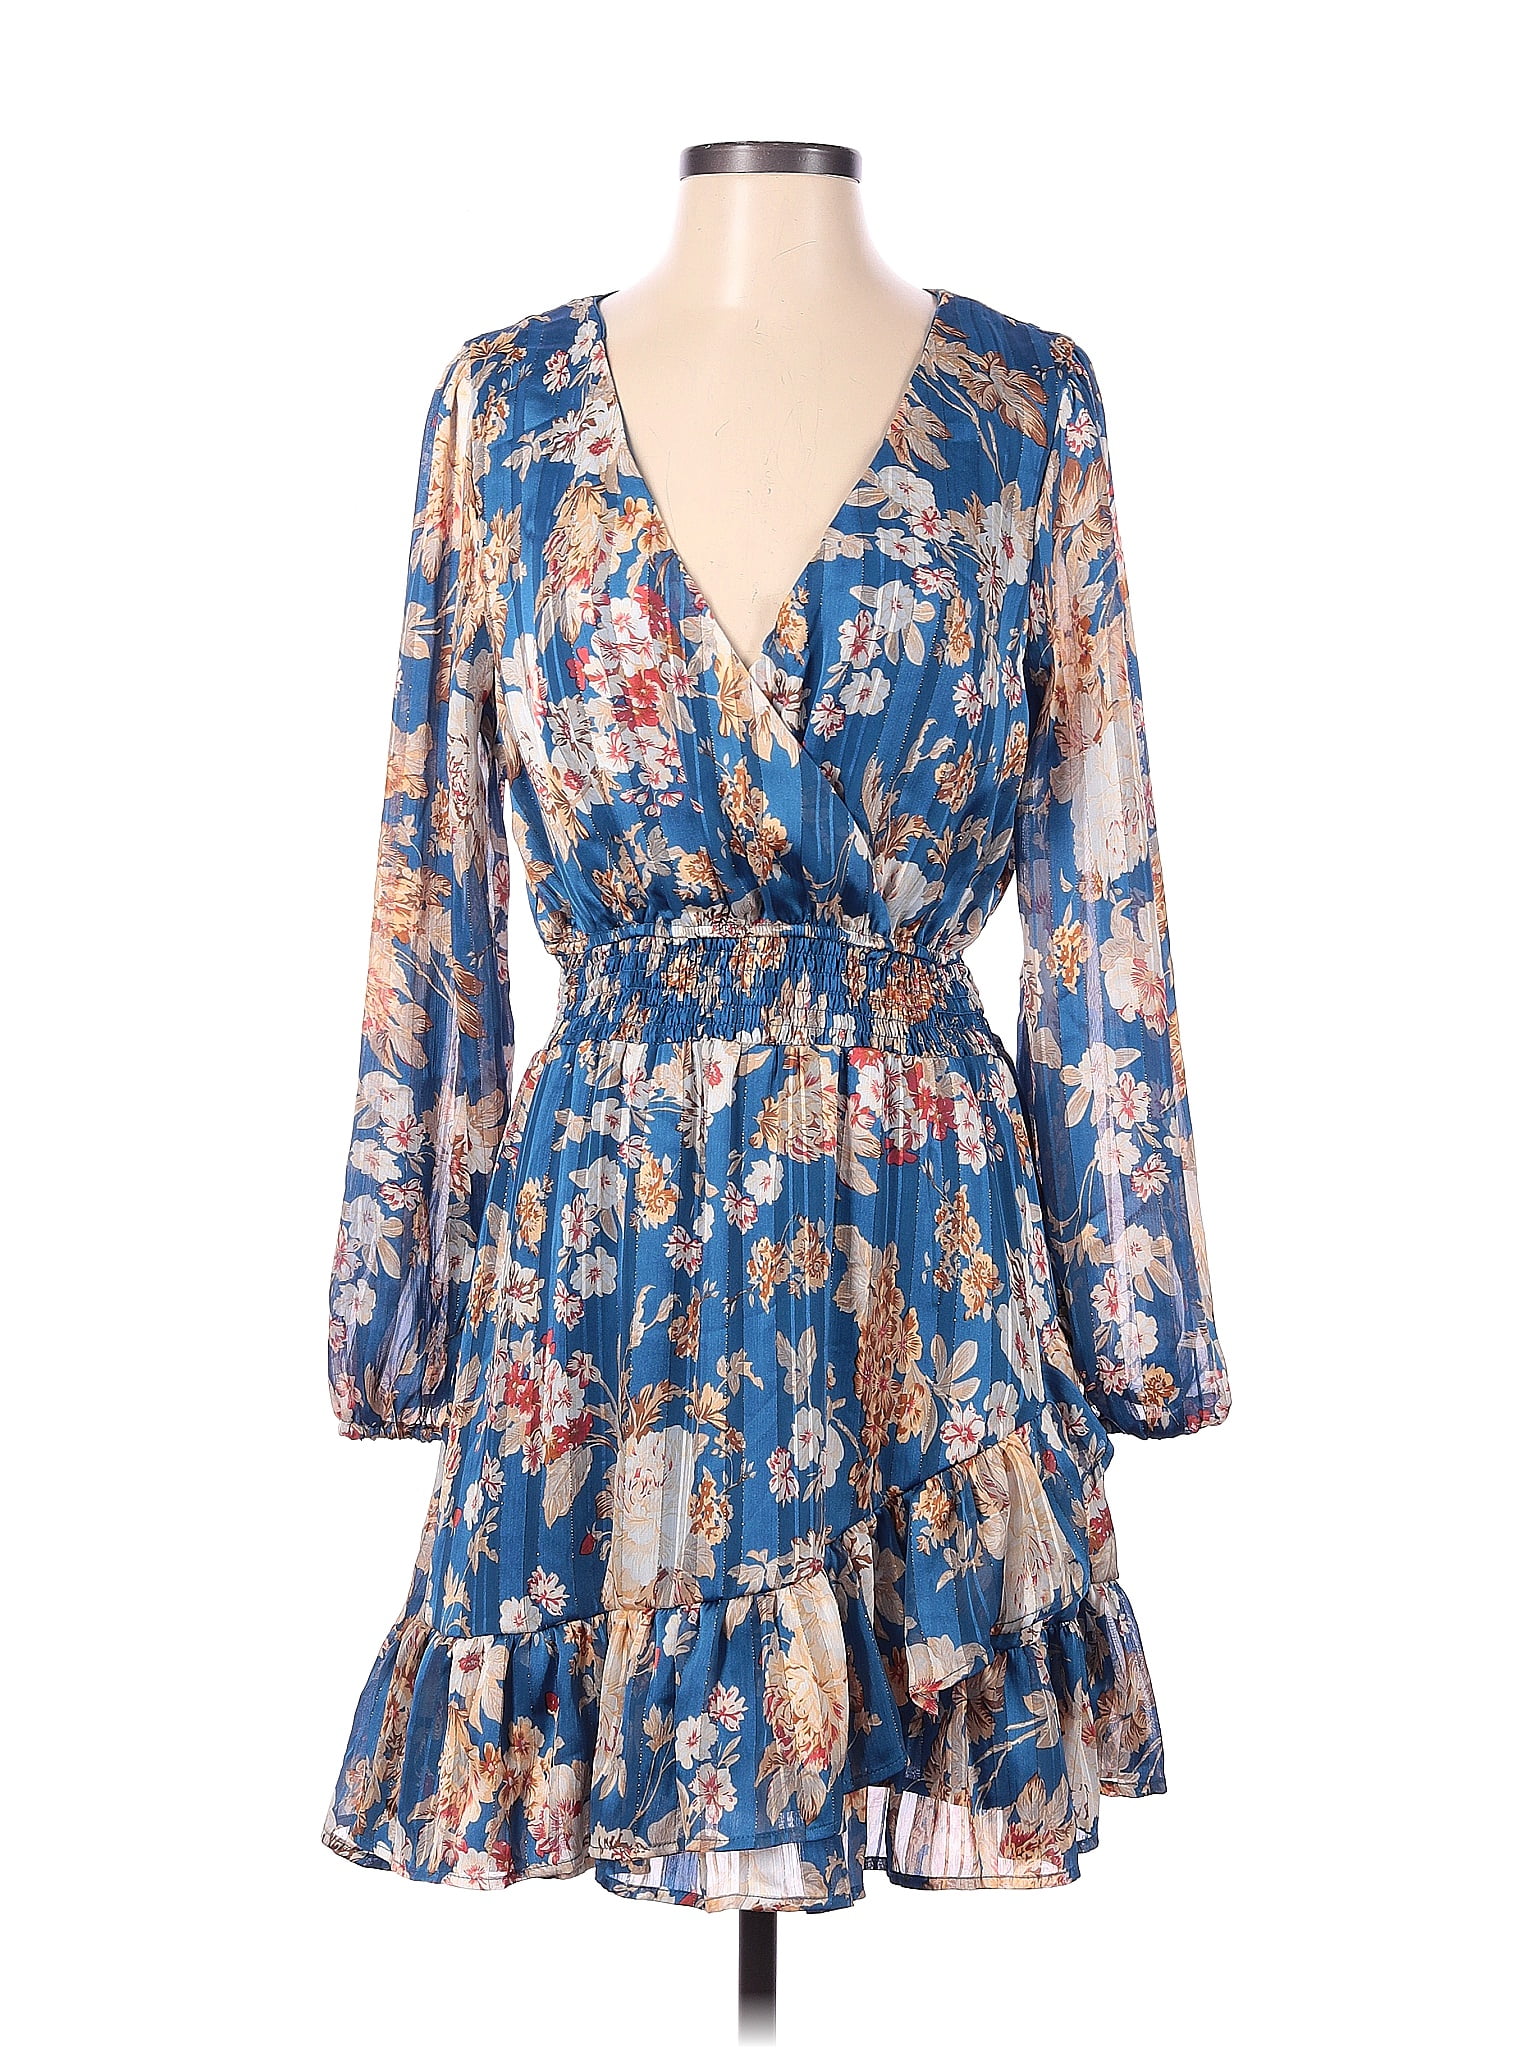 Kori America 100% Polyester Floral Multi Color Blue Casual Dress Size S ...